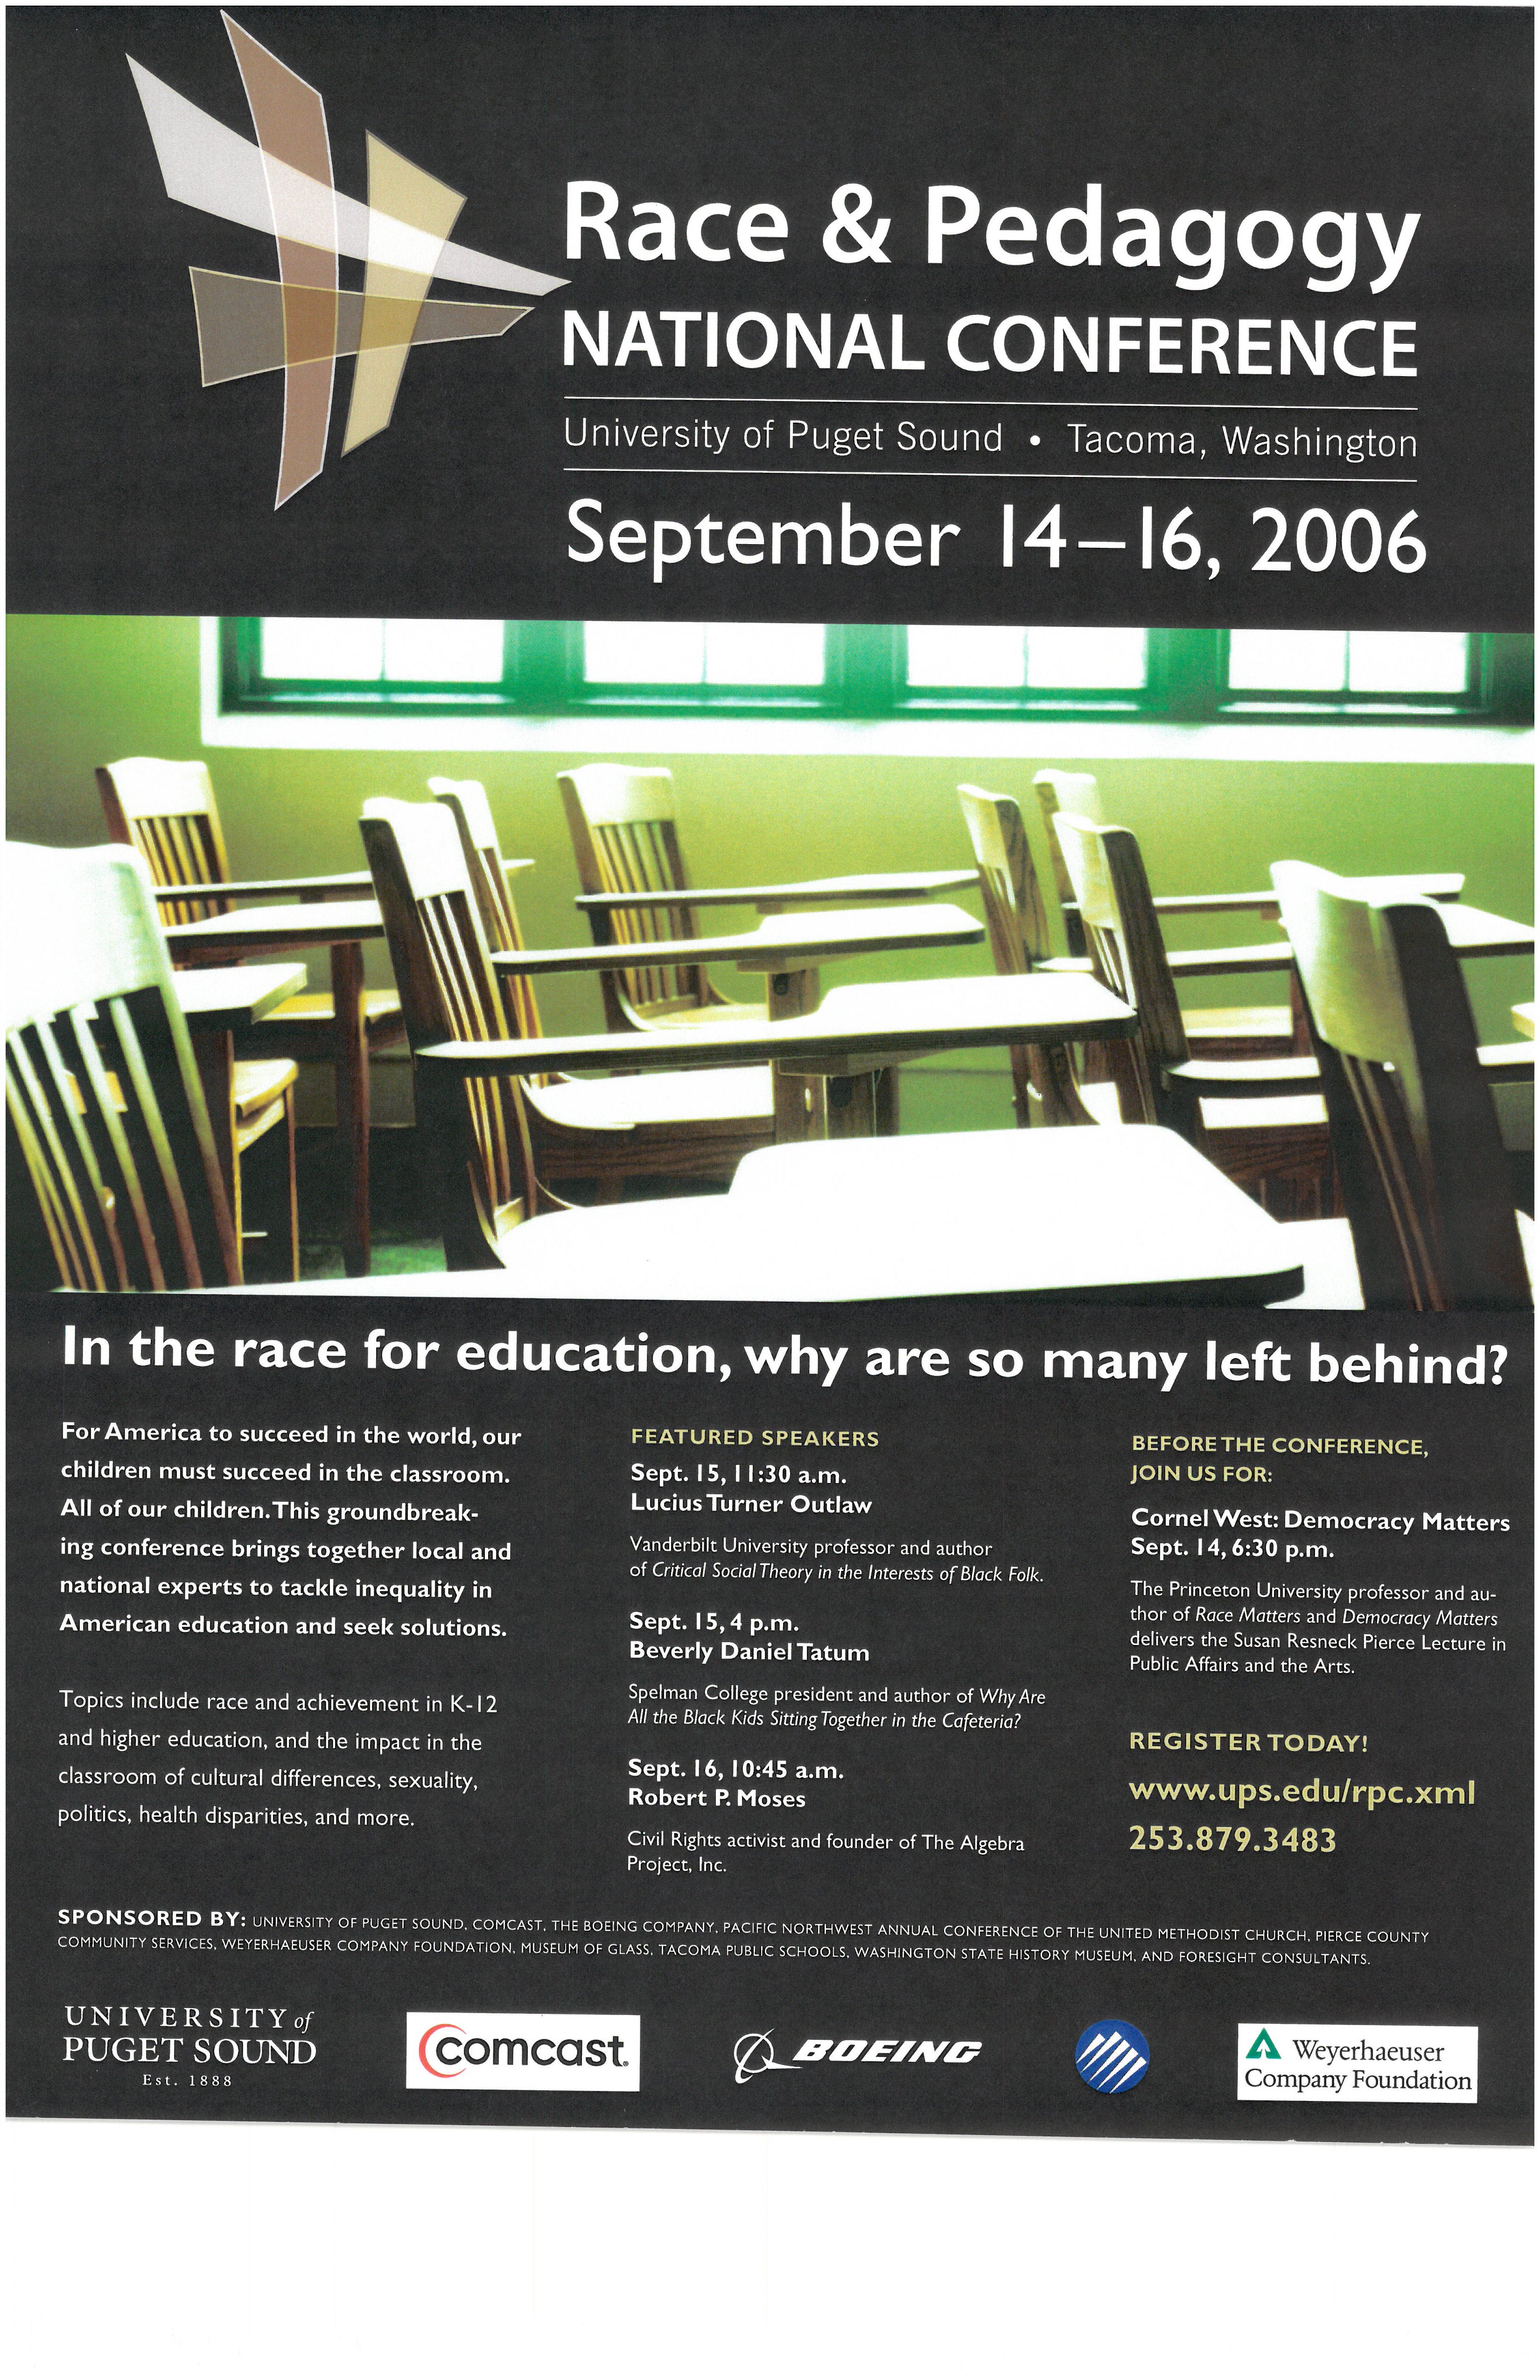 2006 RPNC advertisement